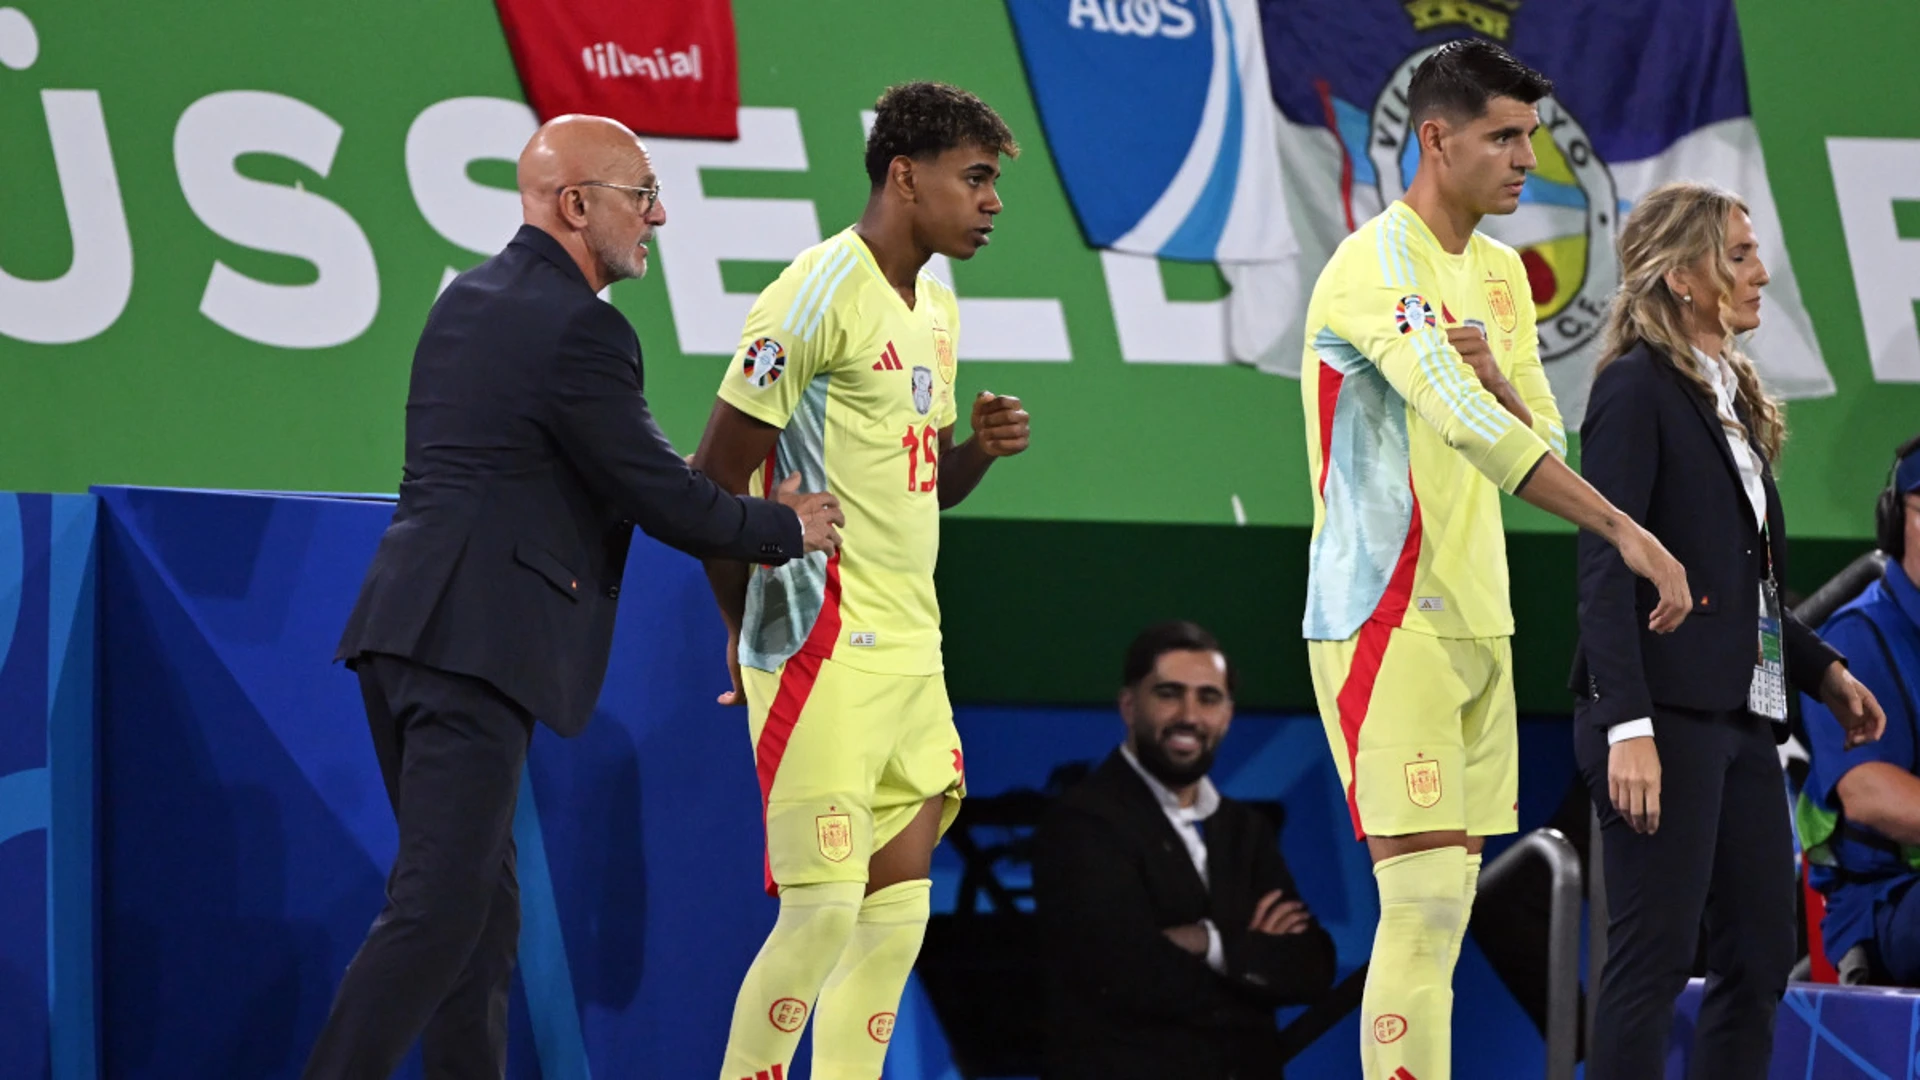 Spain won't take Georgia lightly, coach says